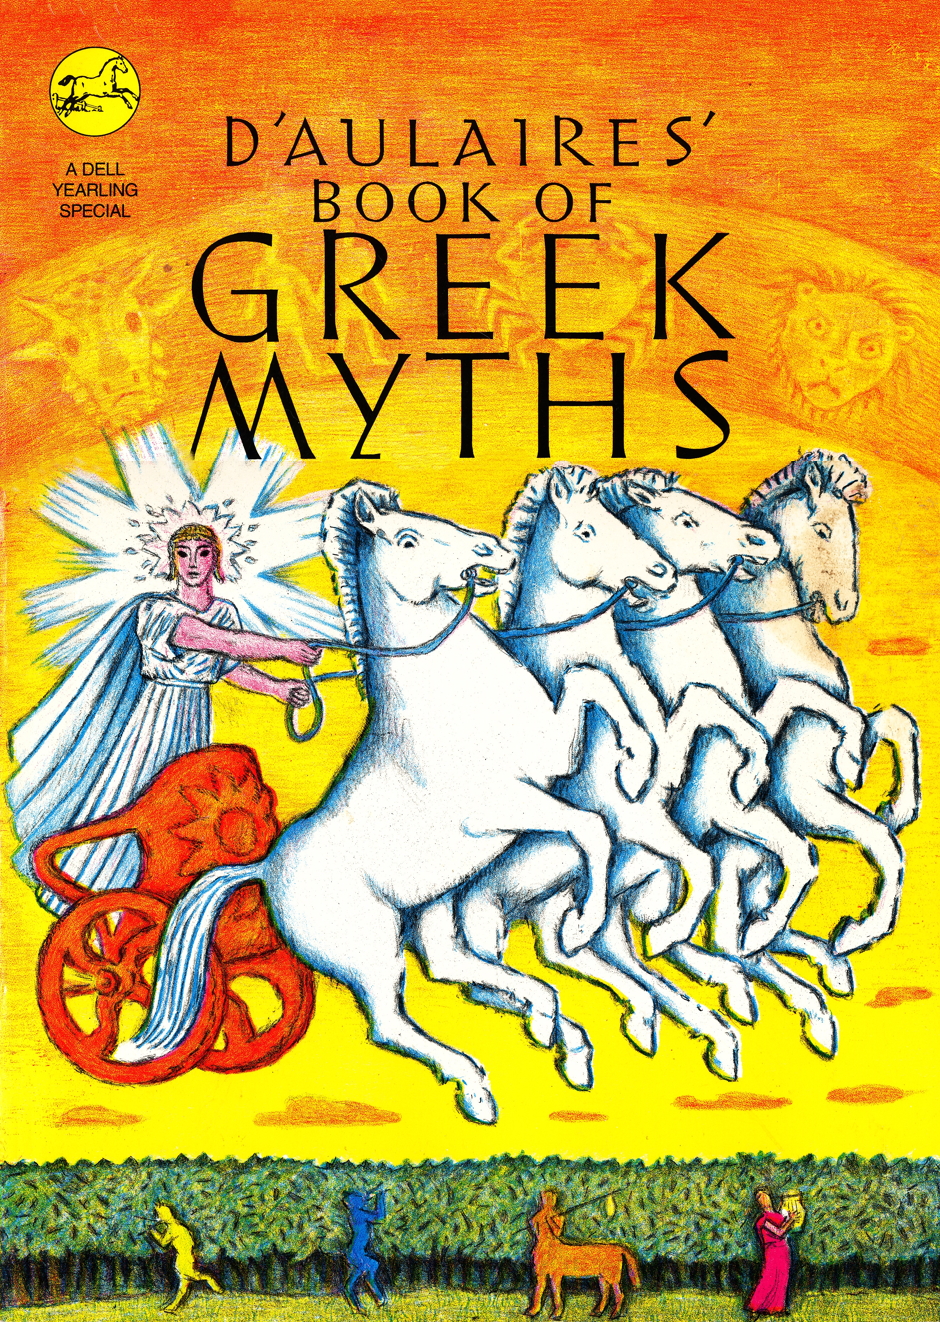 D'Aulaires' Book of Greek Myths | Children's Books Wiki | FANDOM